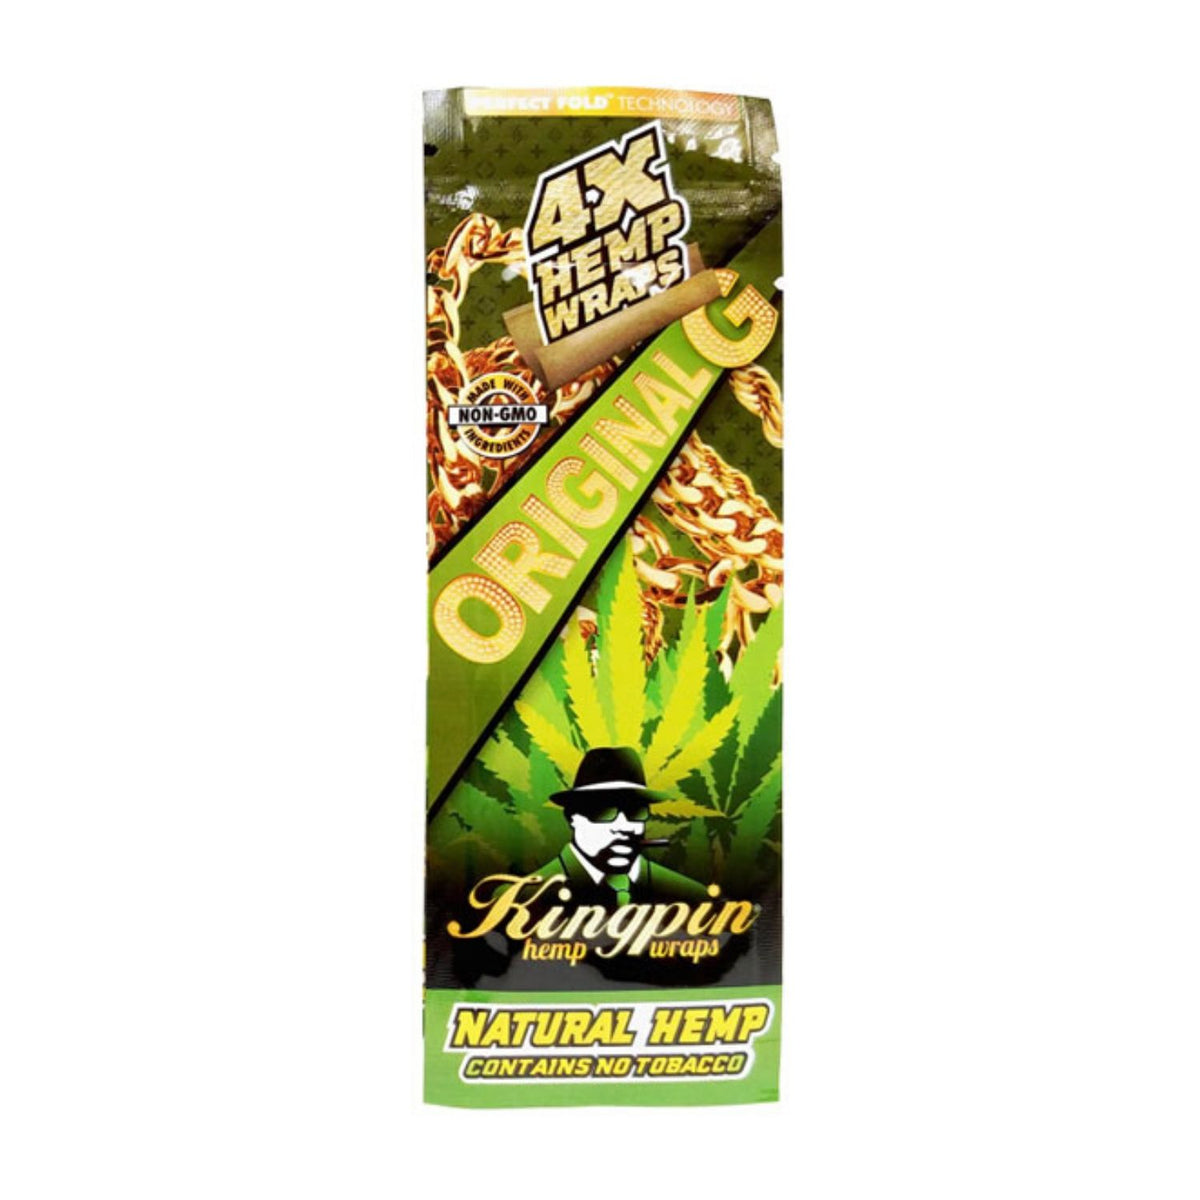 KingPin Organic Blunt Wrap - Original Flavor